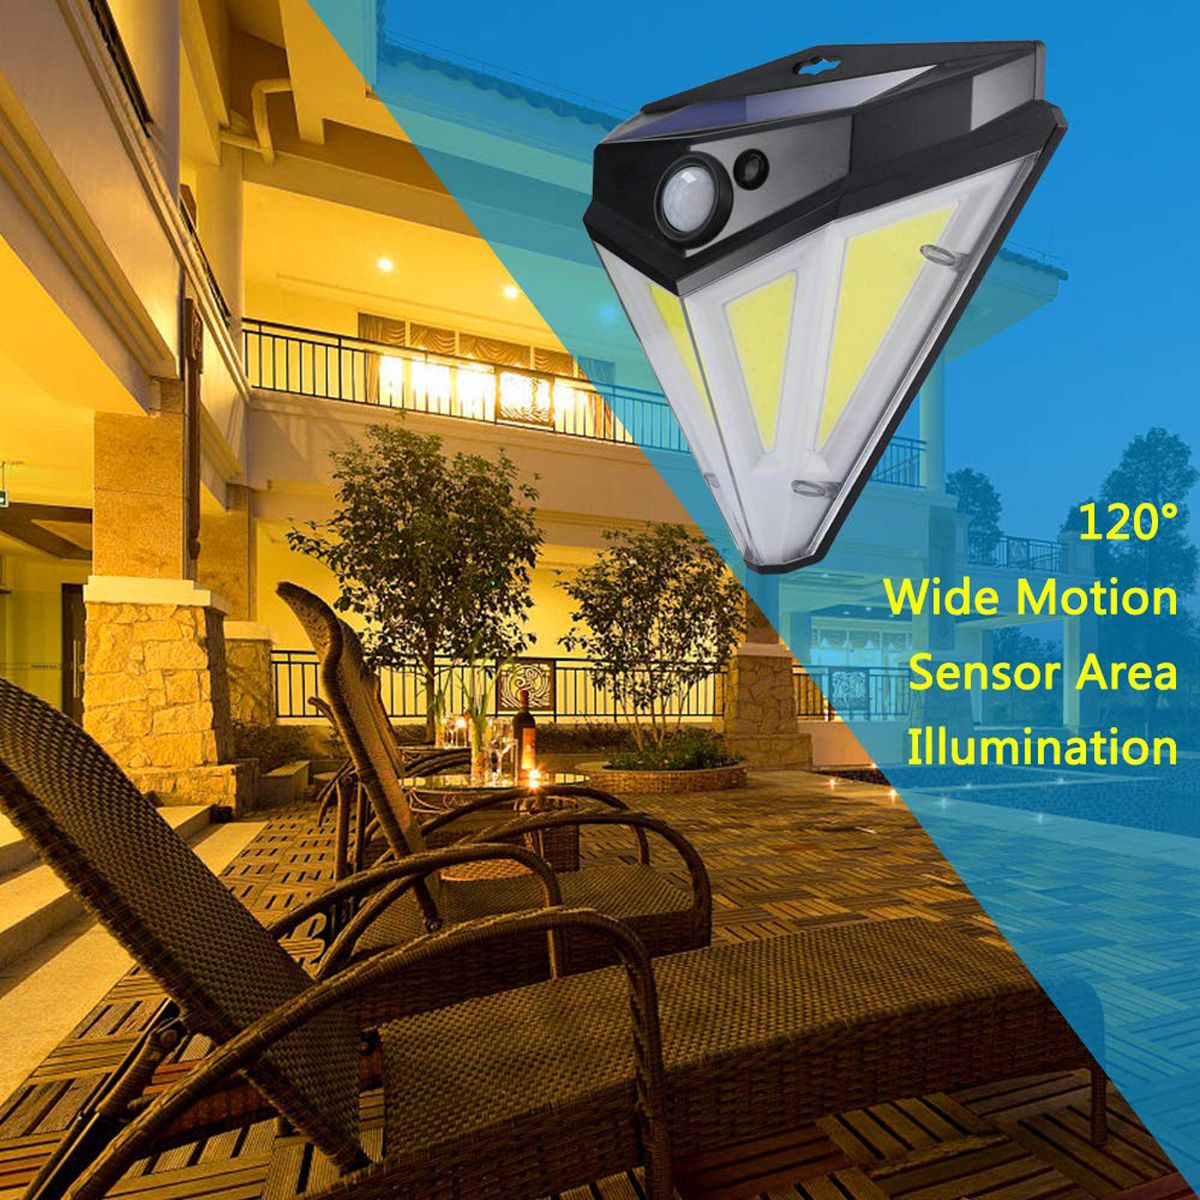 84LED-COB-Solar-Light-PIR-Motion-Wall-Light-Home-Garden-Outdoor-Lamp-1588012